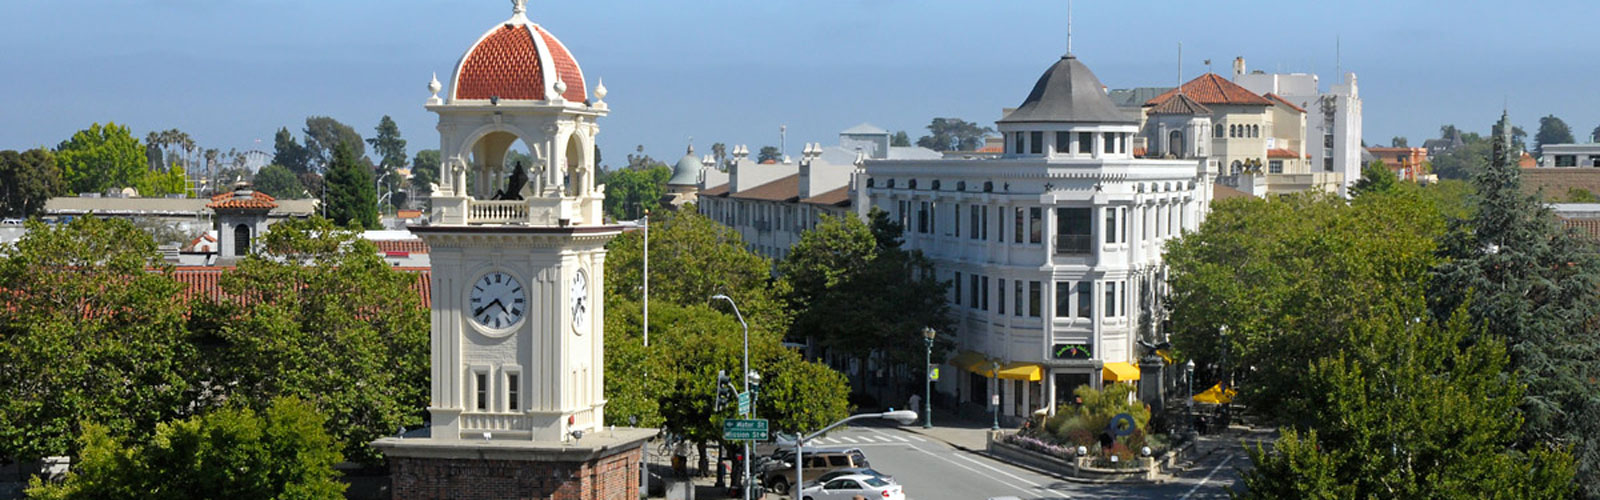 Downtown Santa Cruz, The home to Chiorini, Hunt & Jacobs